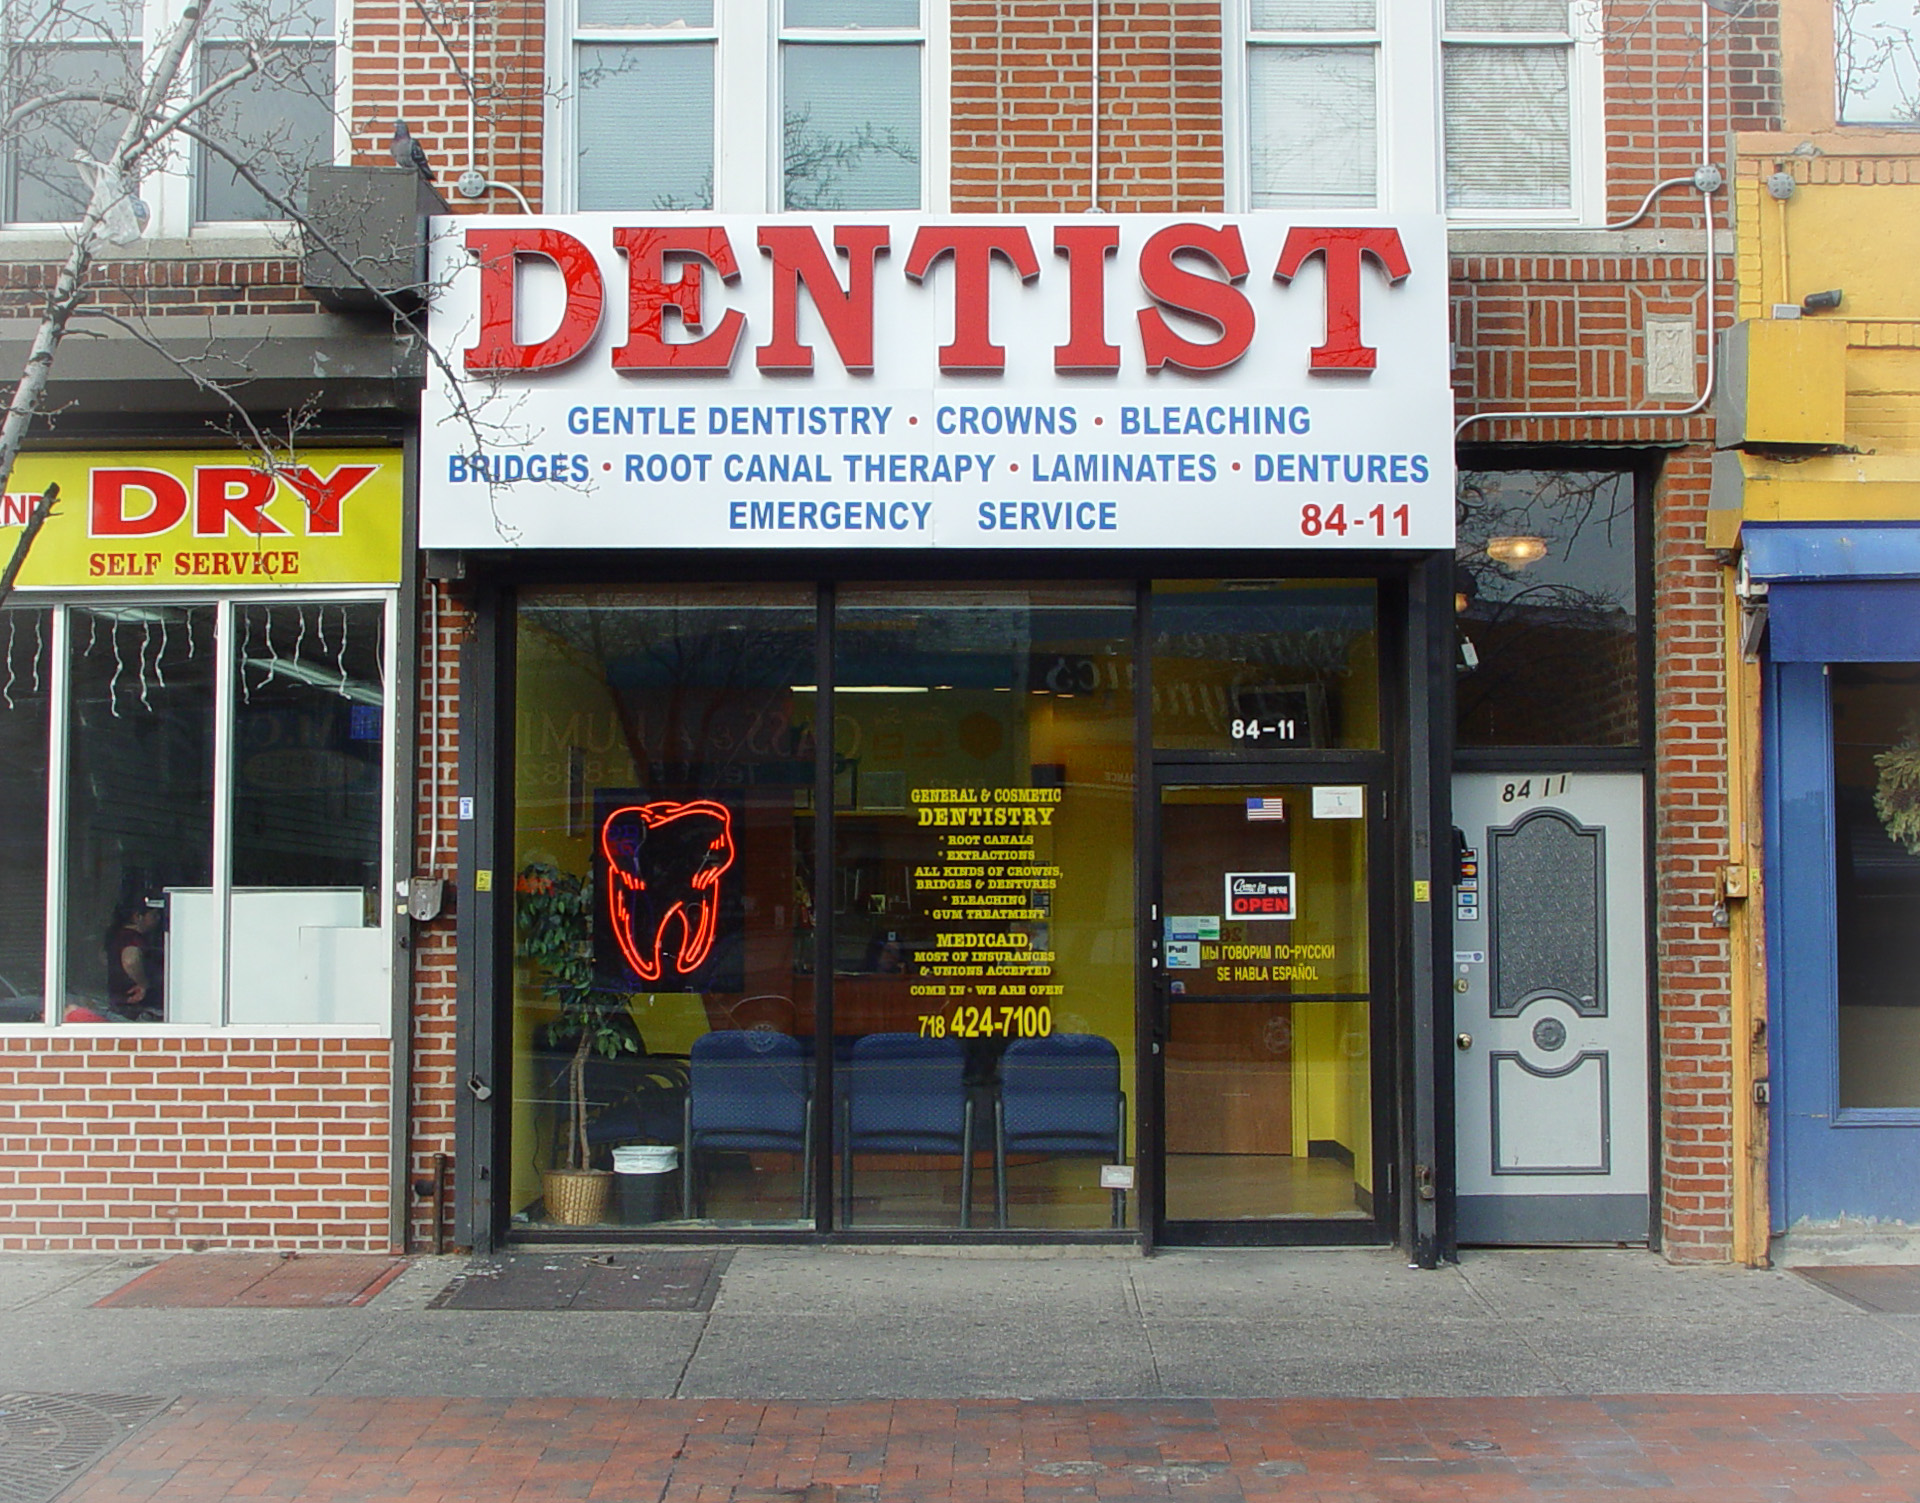 Alliance Dental Center : Jackson heights NY